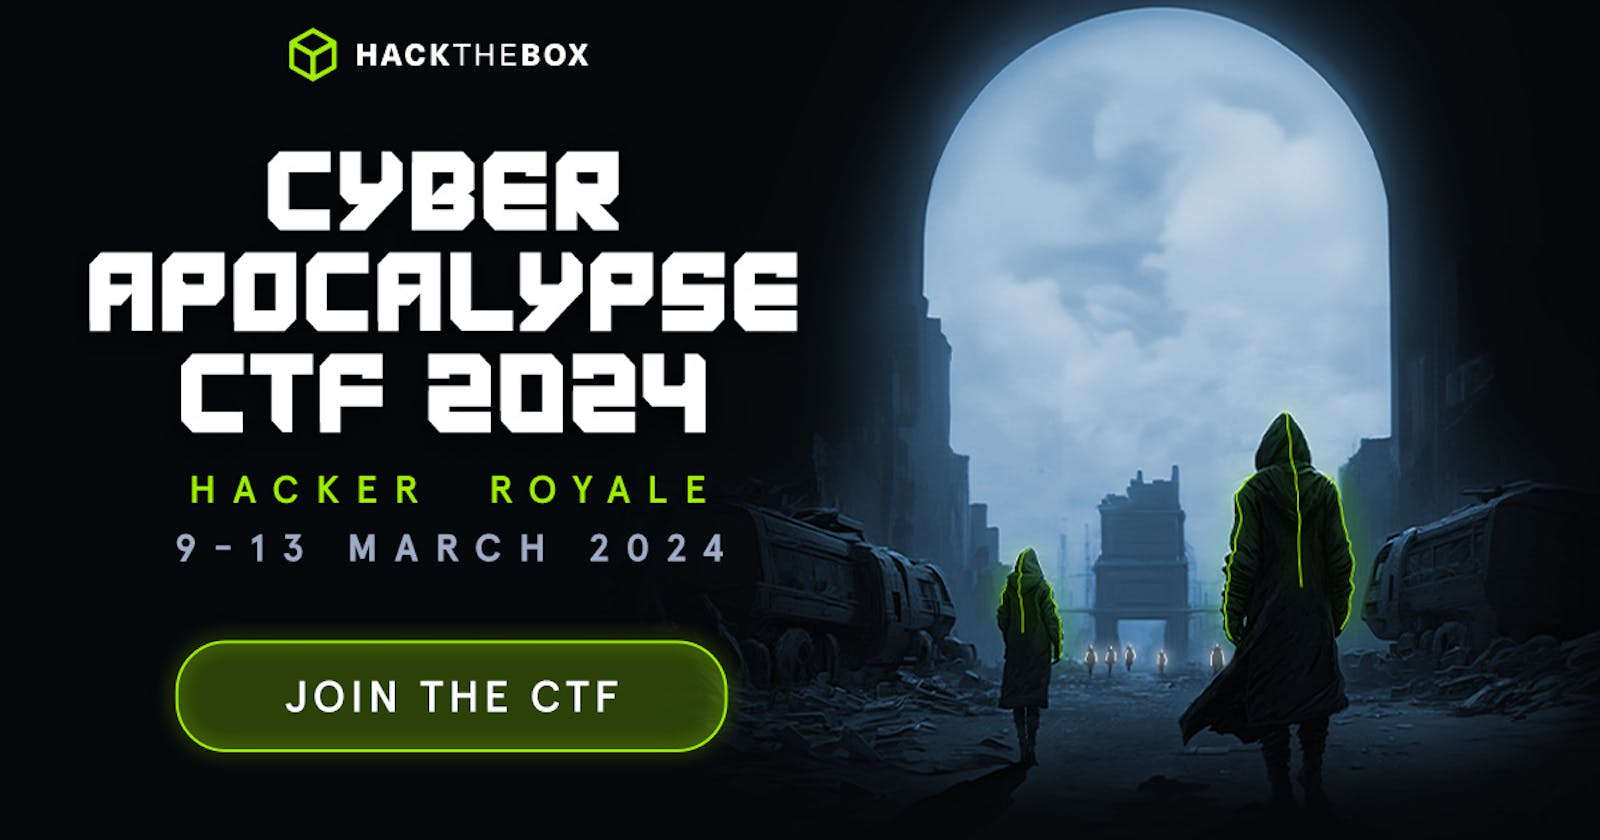 Cyber Apocalypse Ctf 2024

hacker Royale